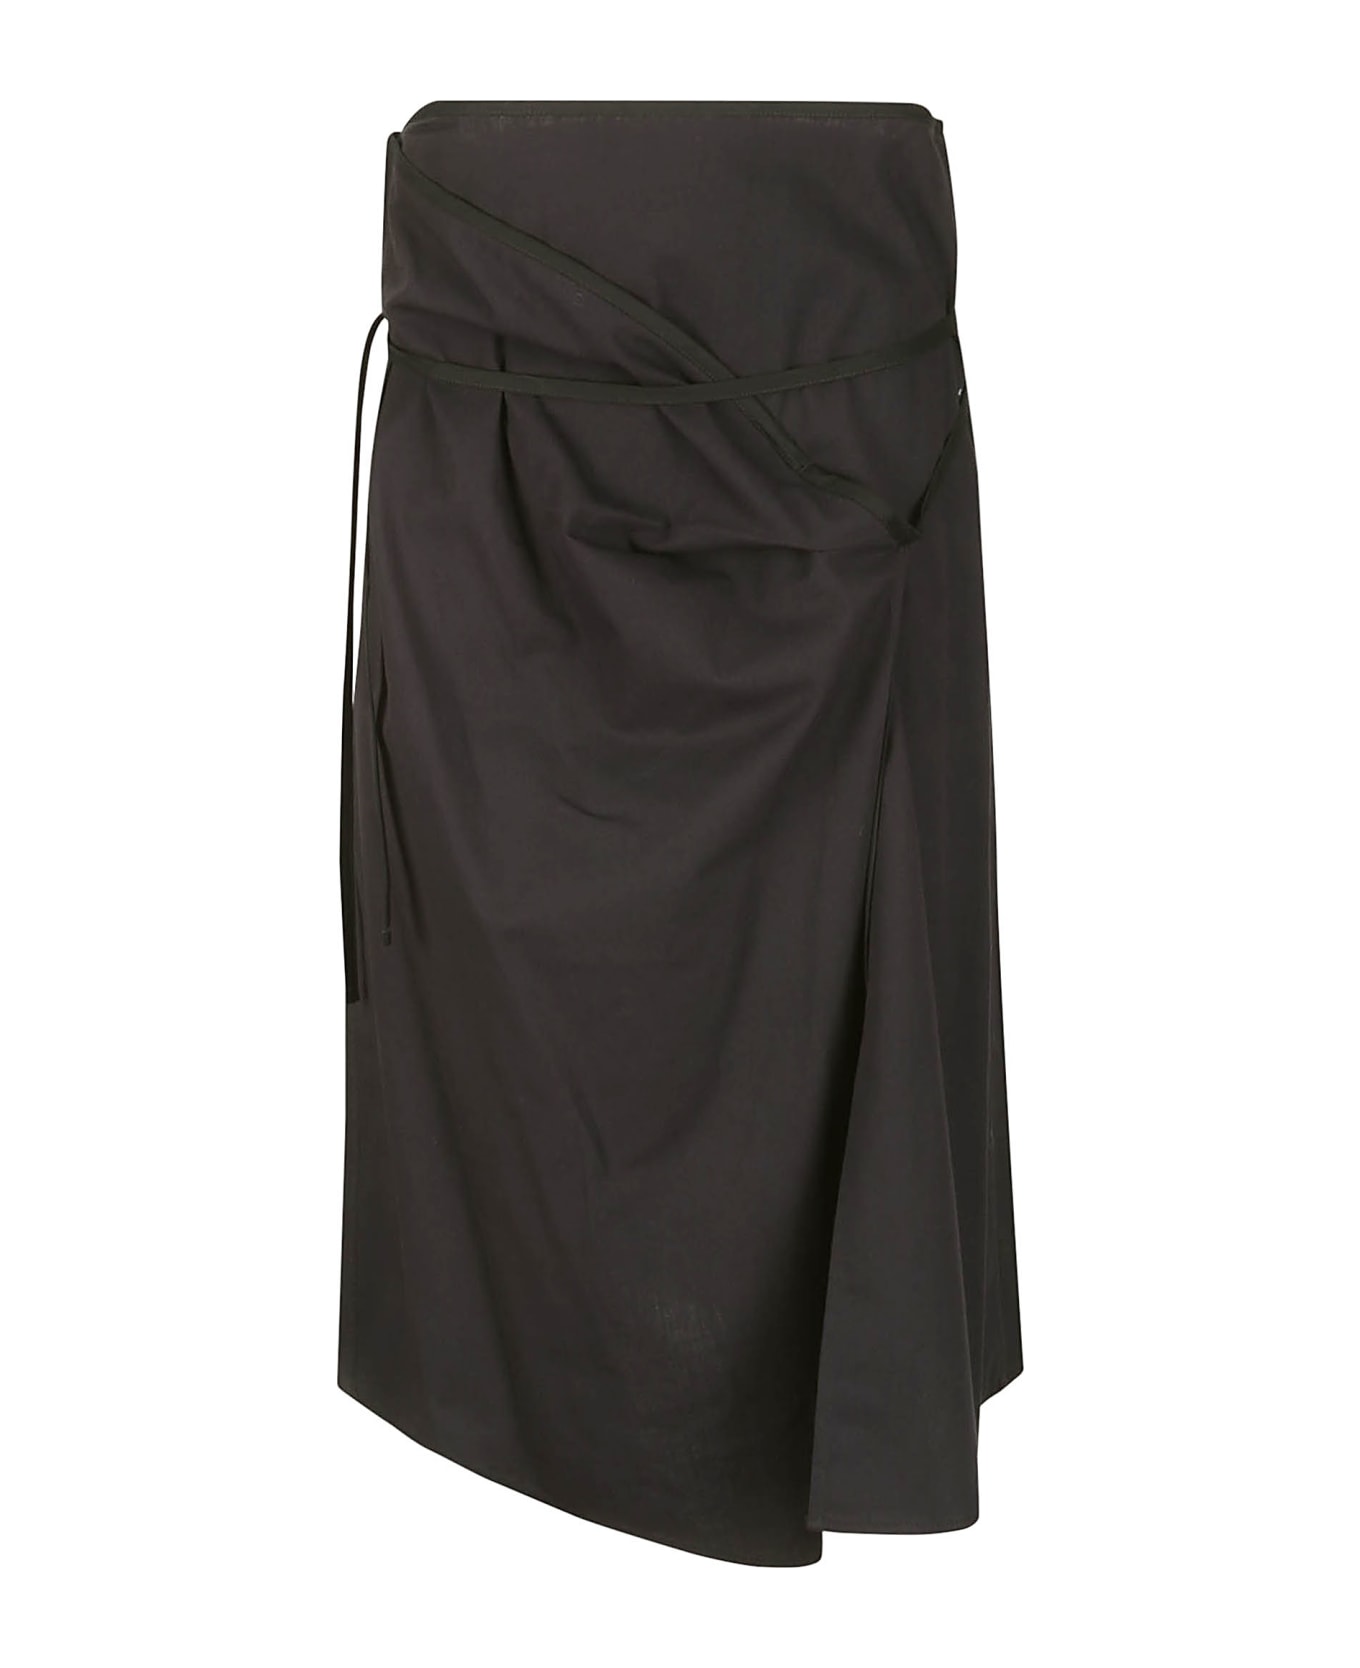 Lemaire Asymmetrical Tied Skirt - MIDNIGHT INDIGO